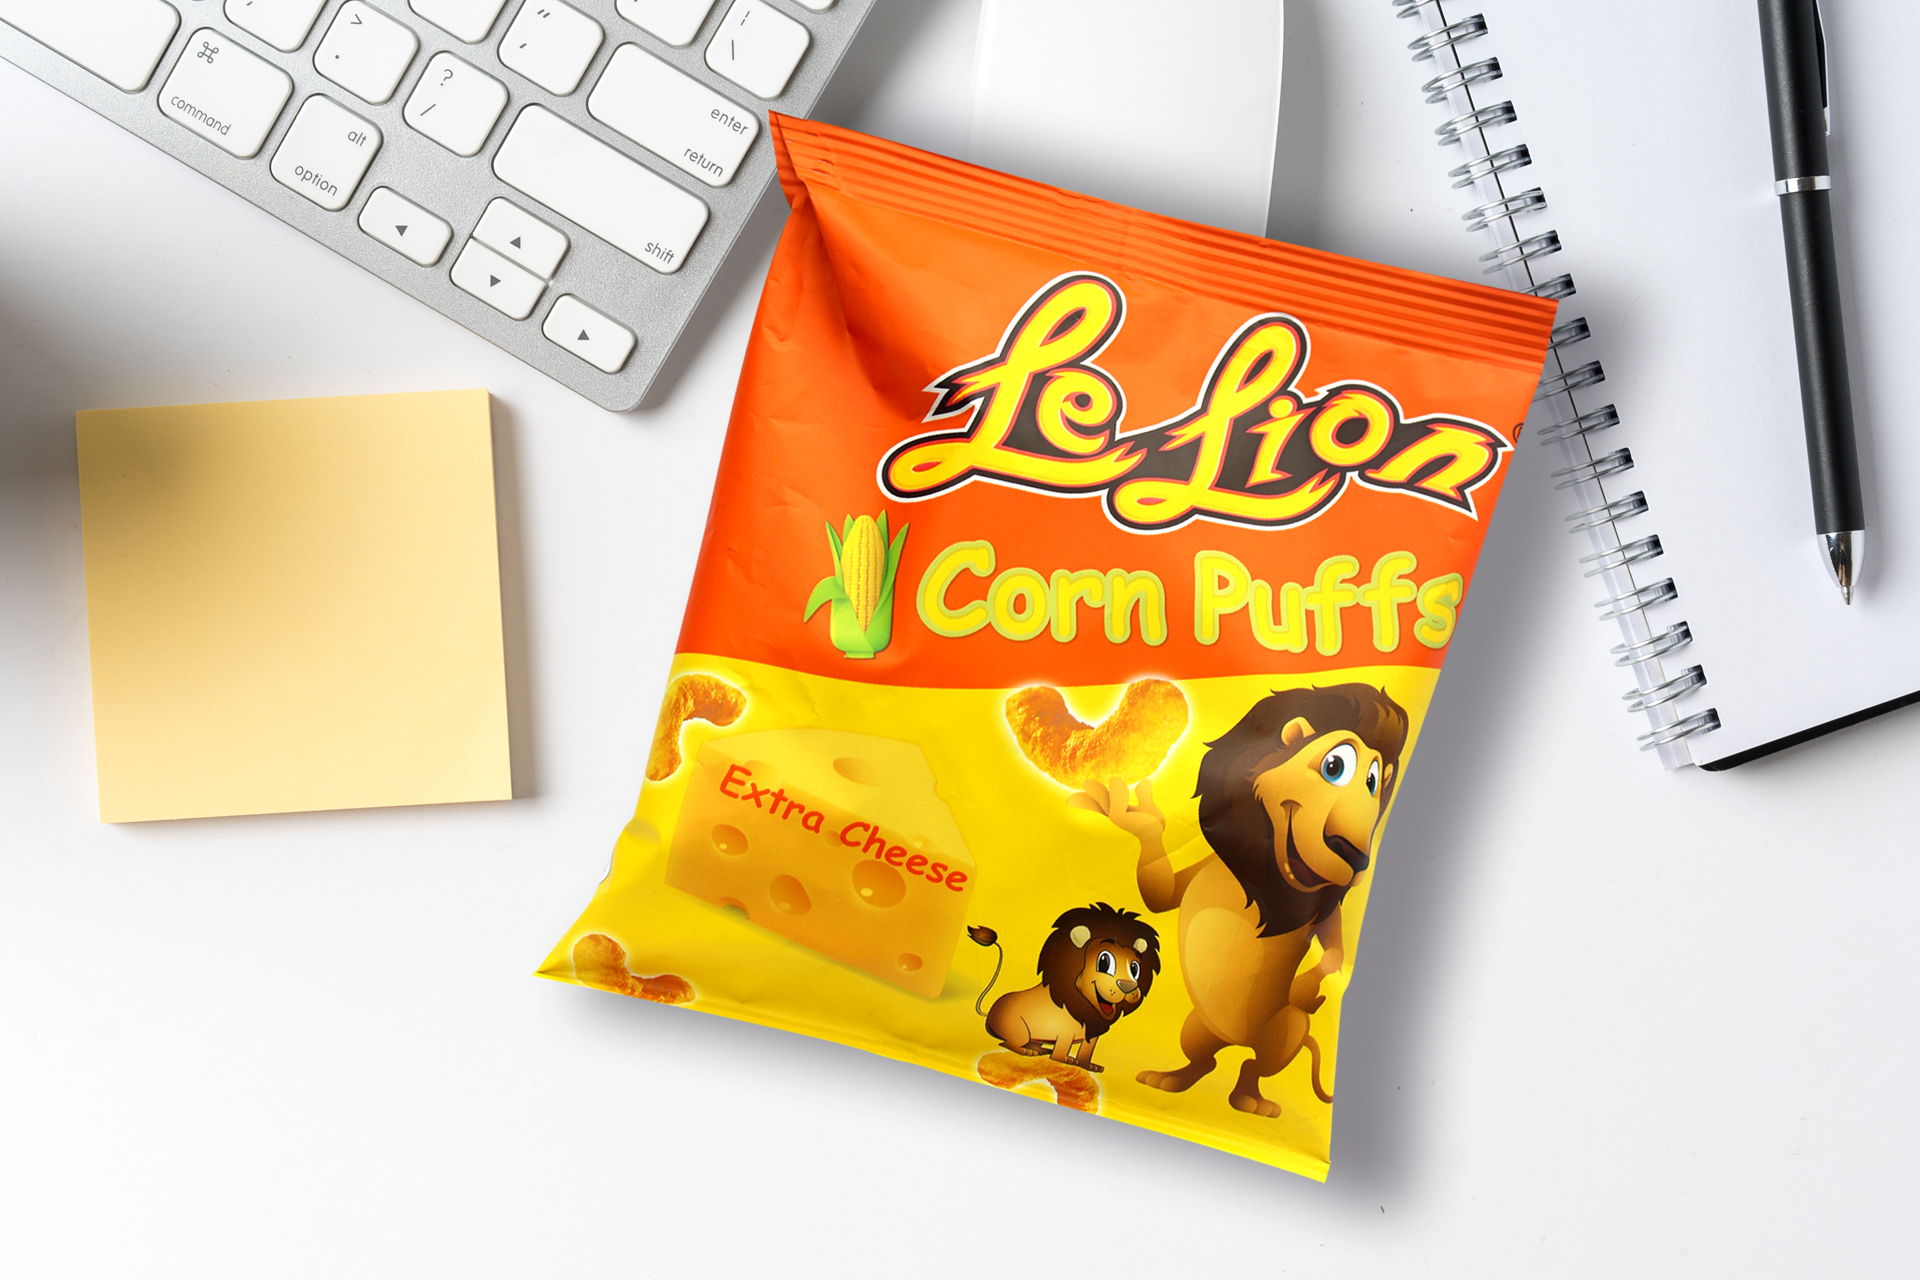 https://orbitsarl.com/wp-content/uploads/2017/08/Product-Chips_LeLion-Corn-Puffs-Cheese_1920x1280-FIN.jpg